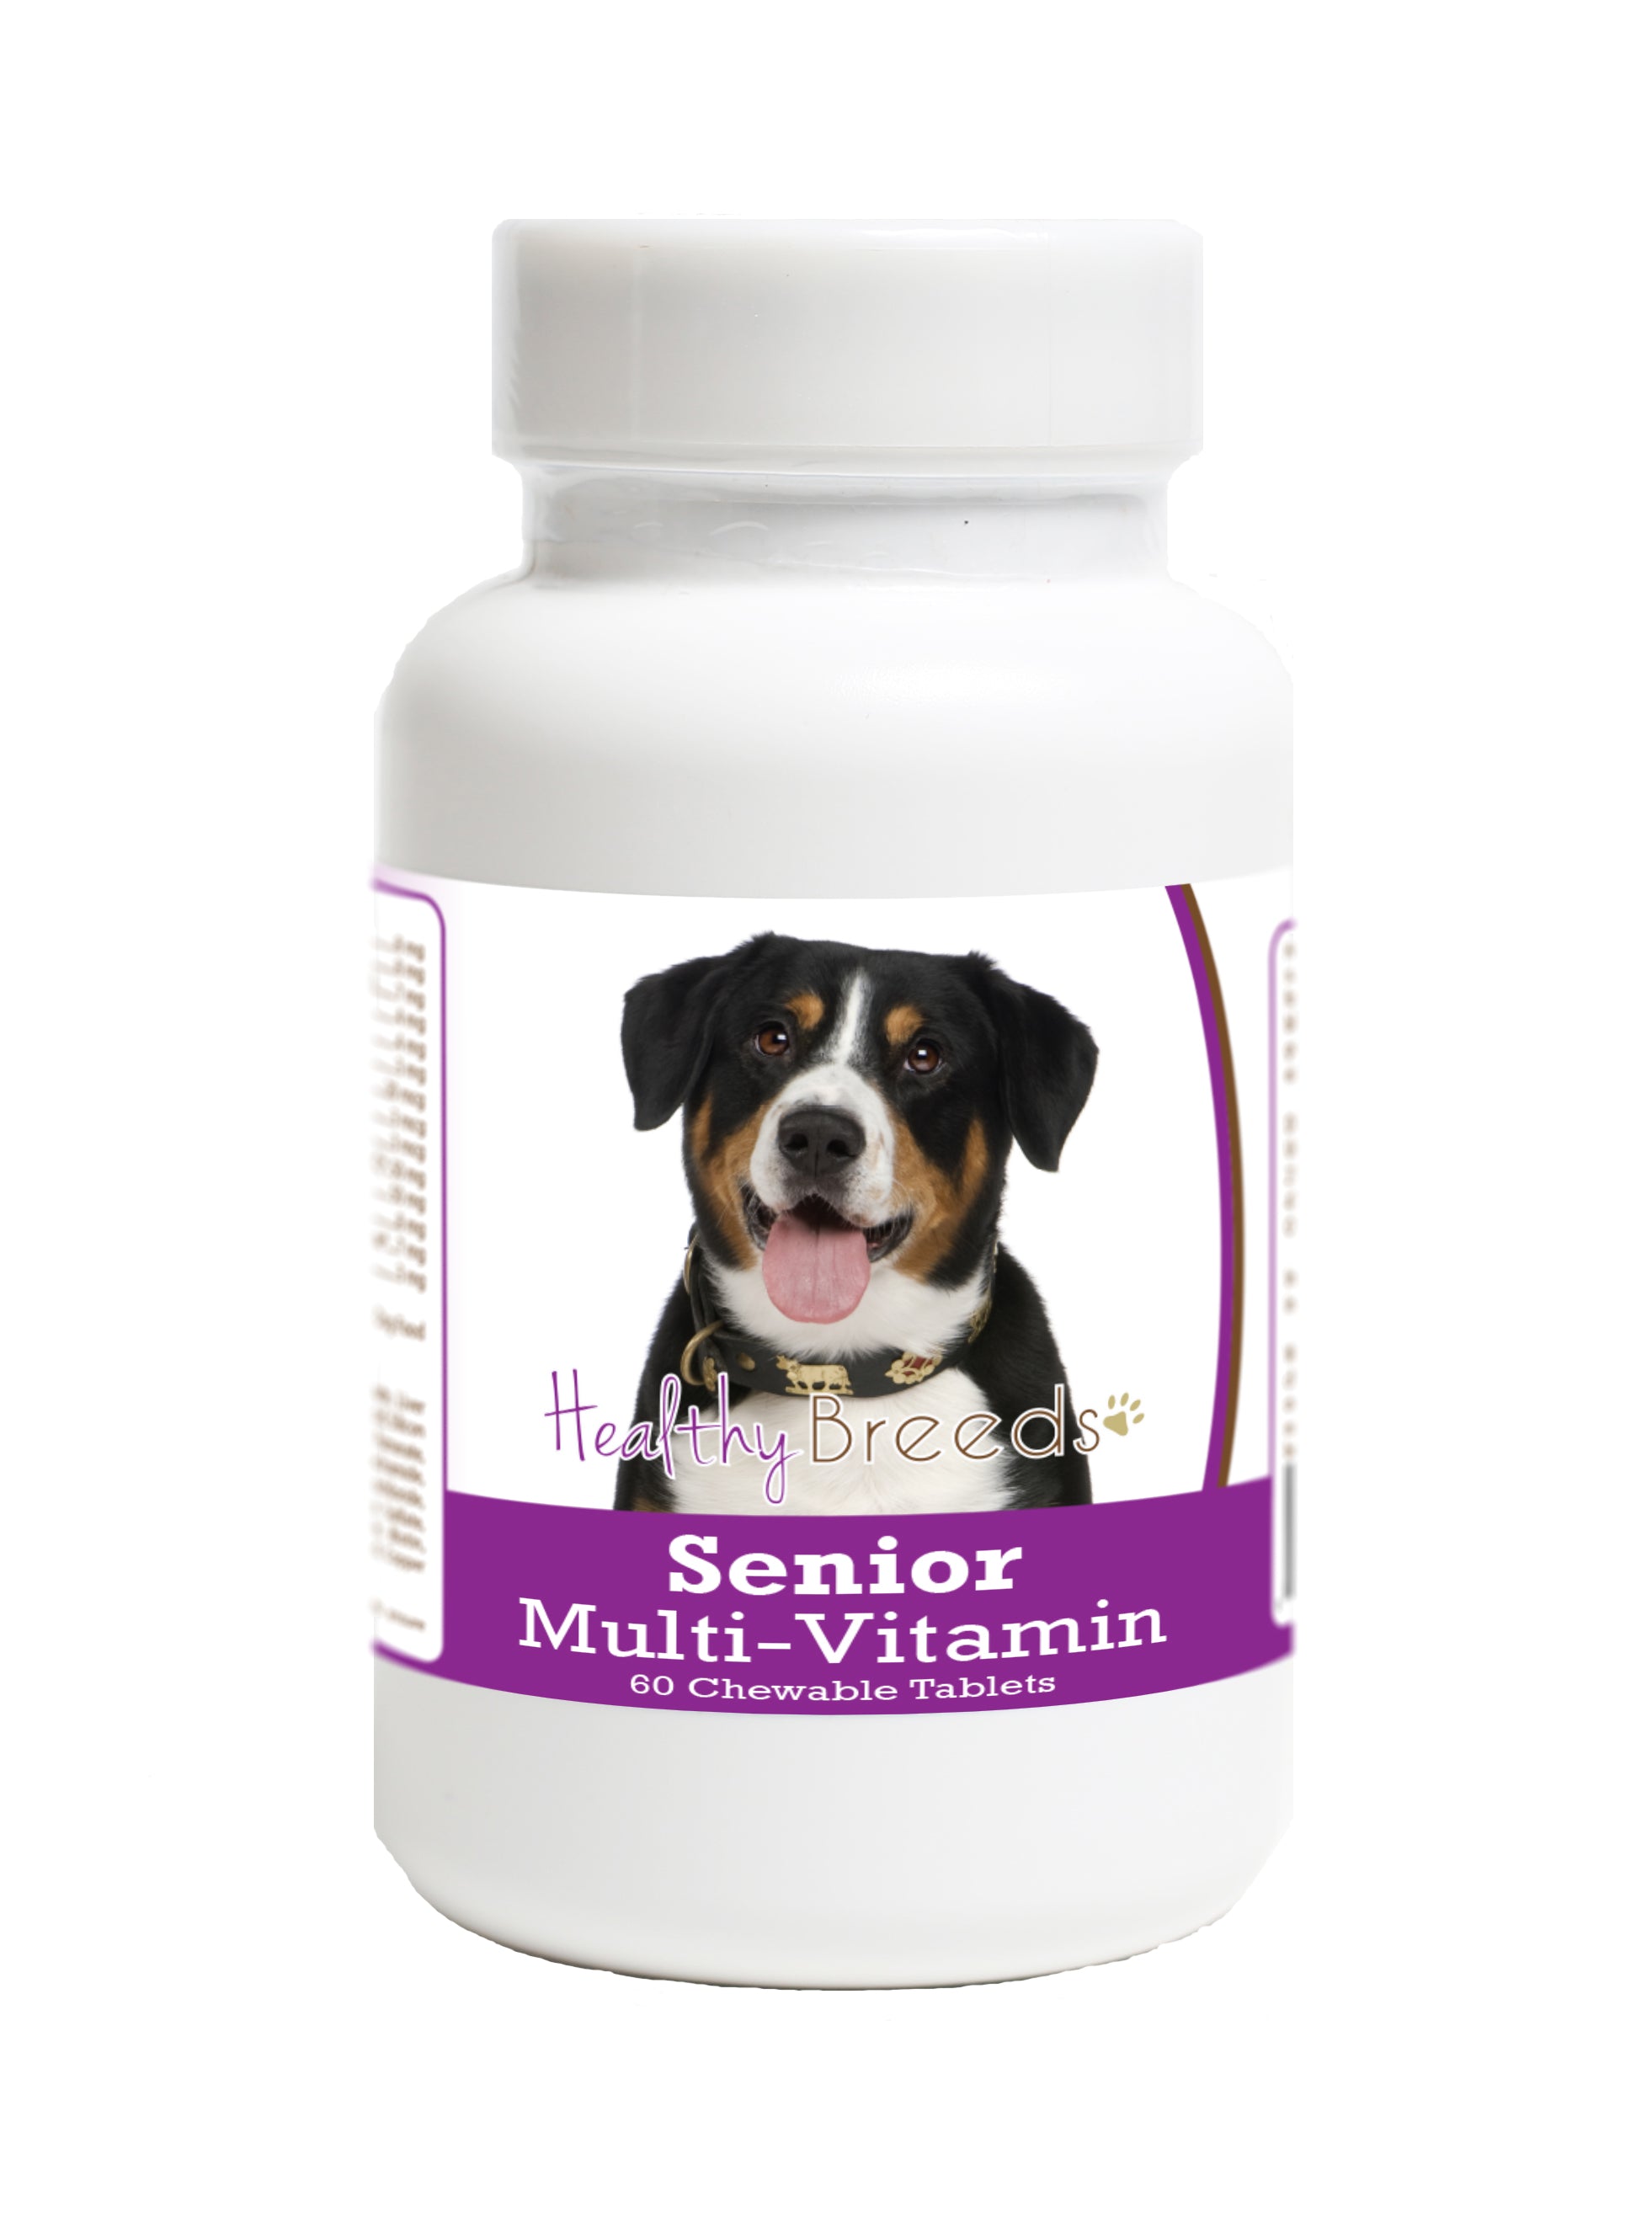 Entlebucher Mountain Dog Senior Dog Multivitamin Tablets 60 Count